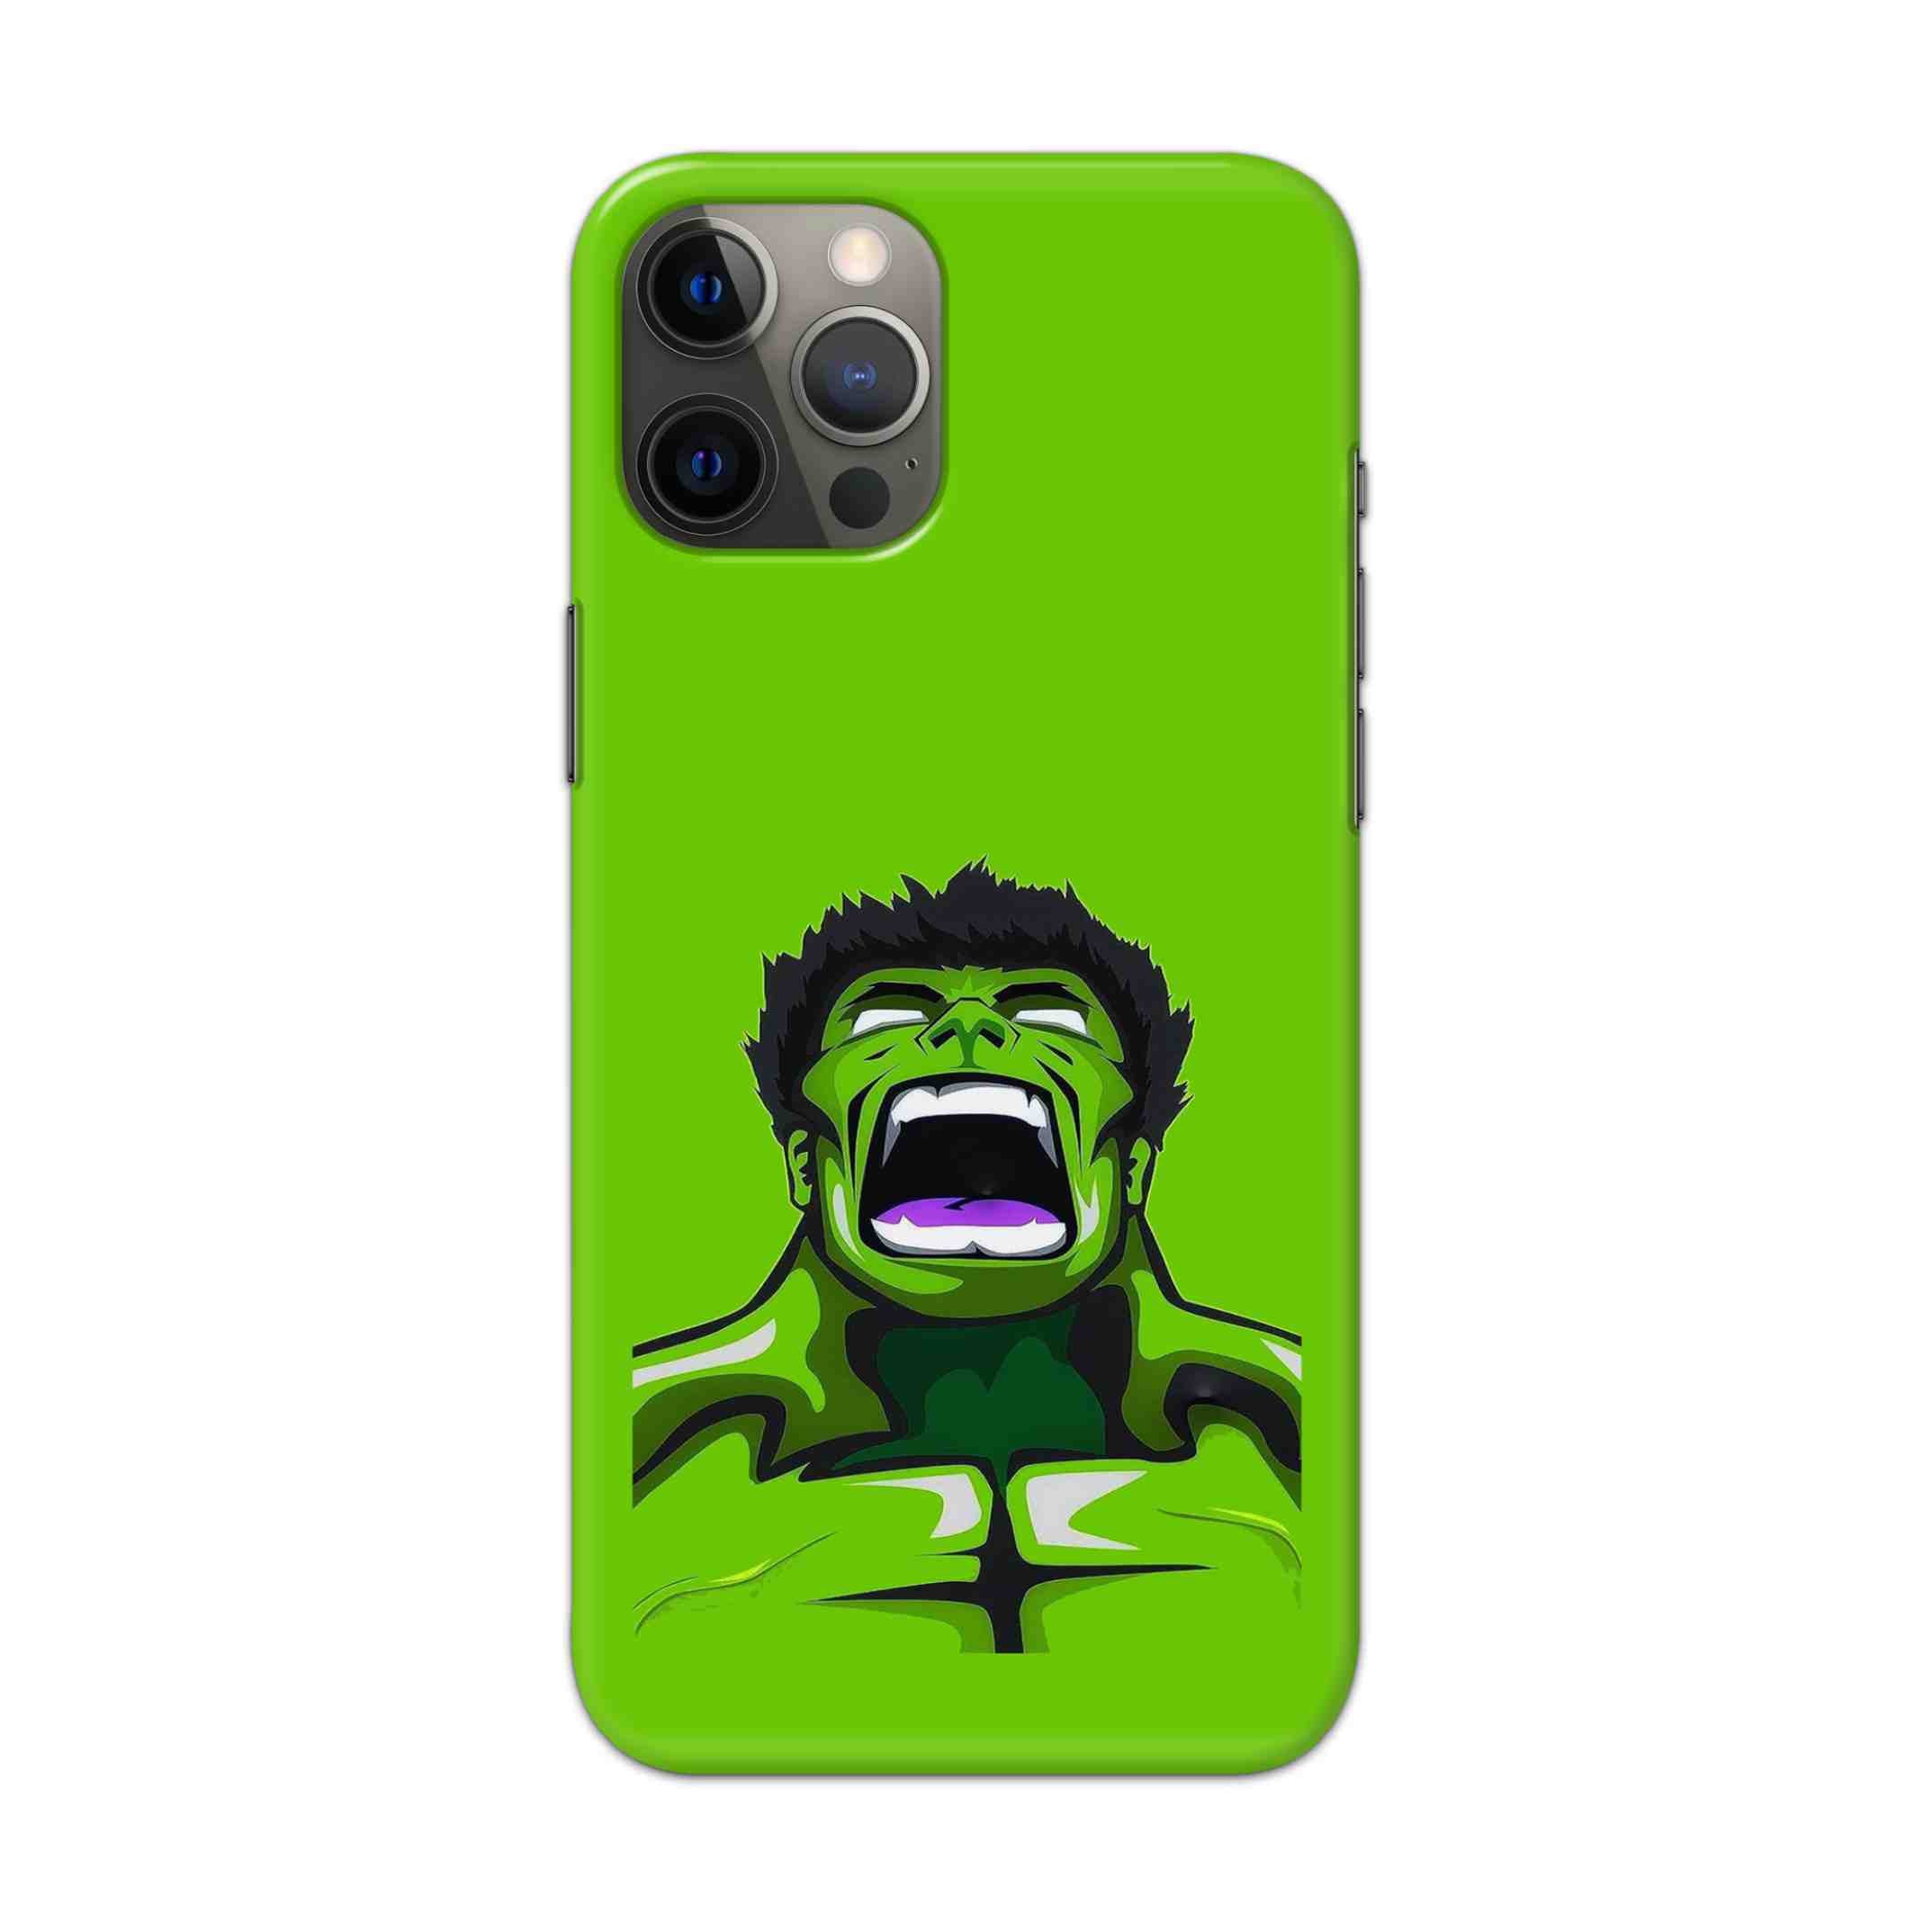 Buy Green Hulk Hard Back Mobile Phone Case/Cover For Apple iPhone 12 pro Online